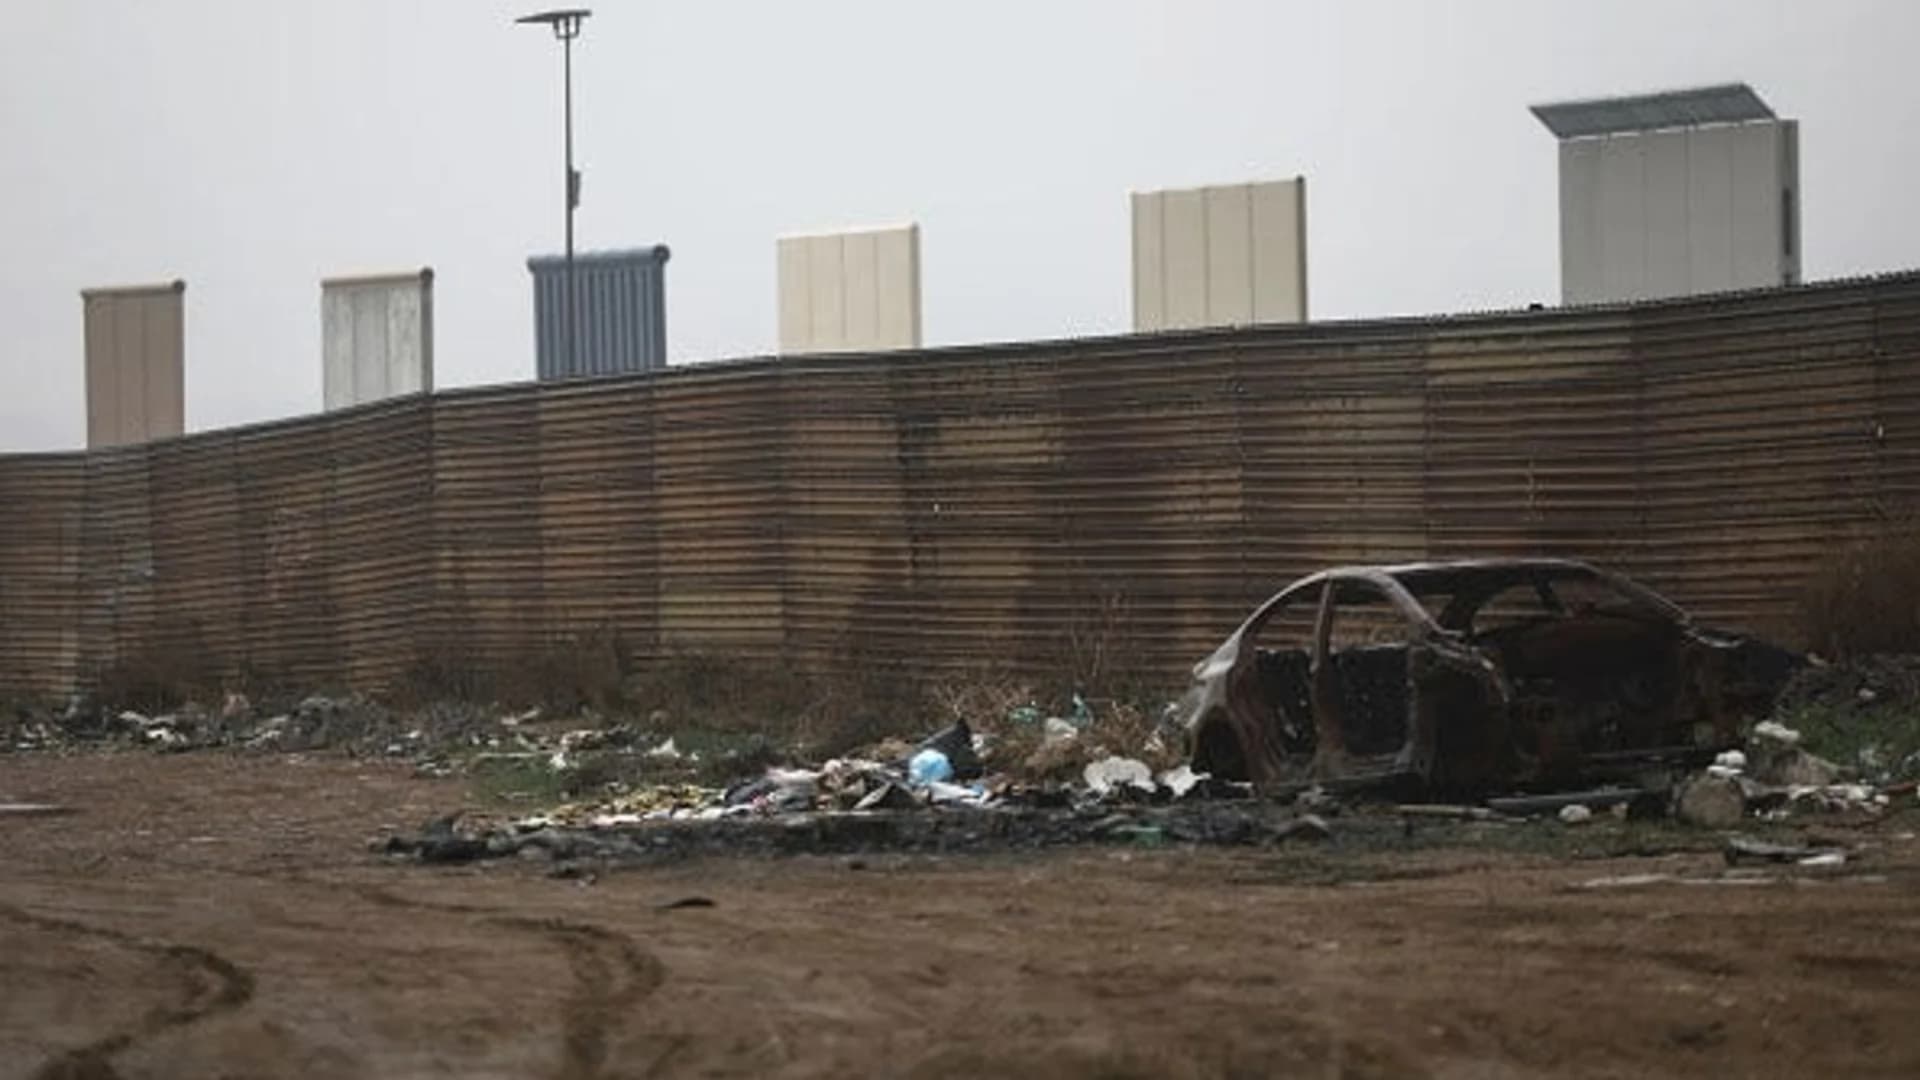 Veteran draws millions in donations for Trump's border wall